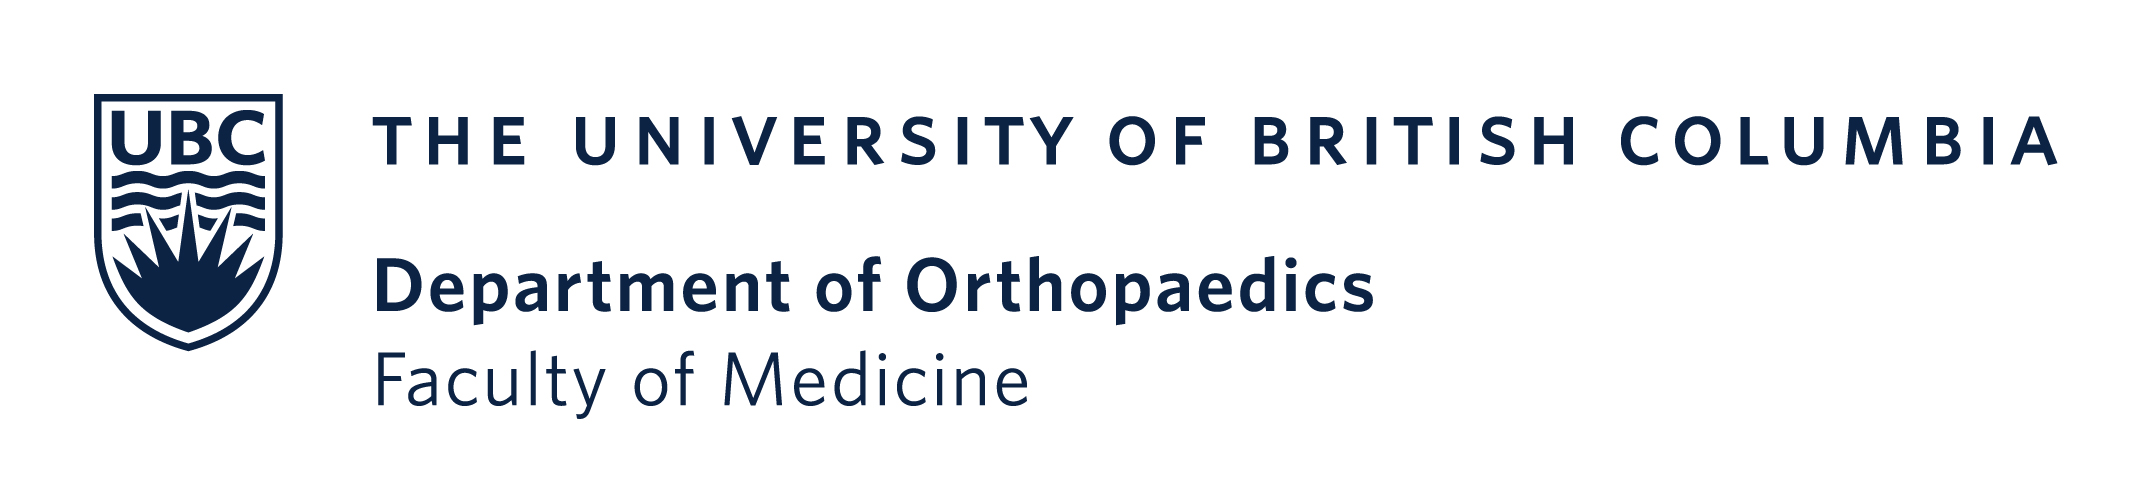 UBC Department of Orthopaedics